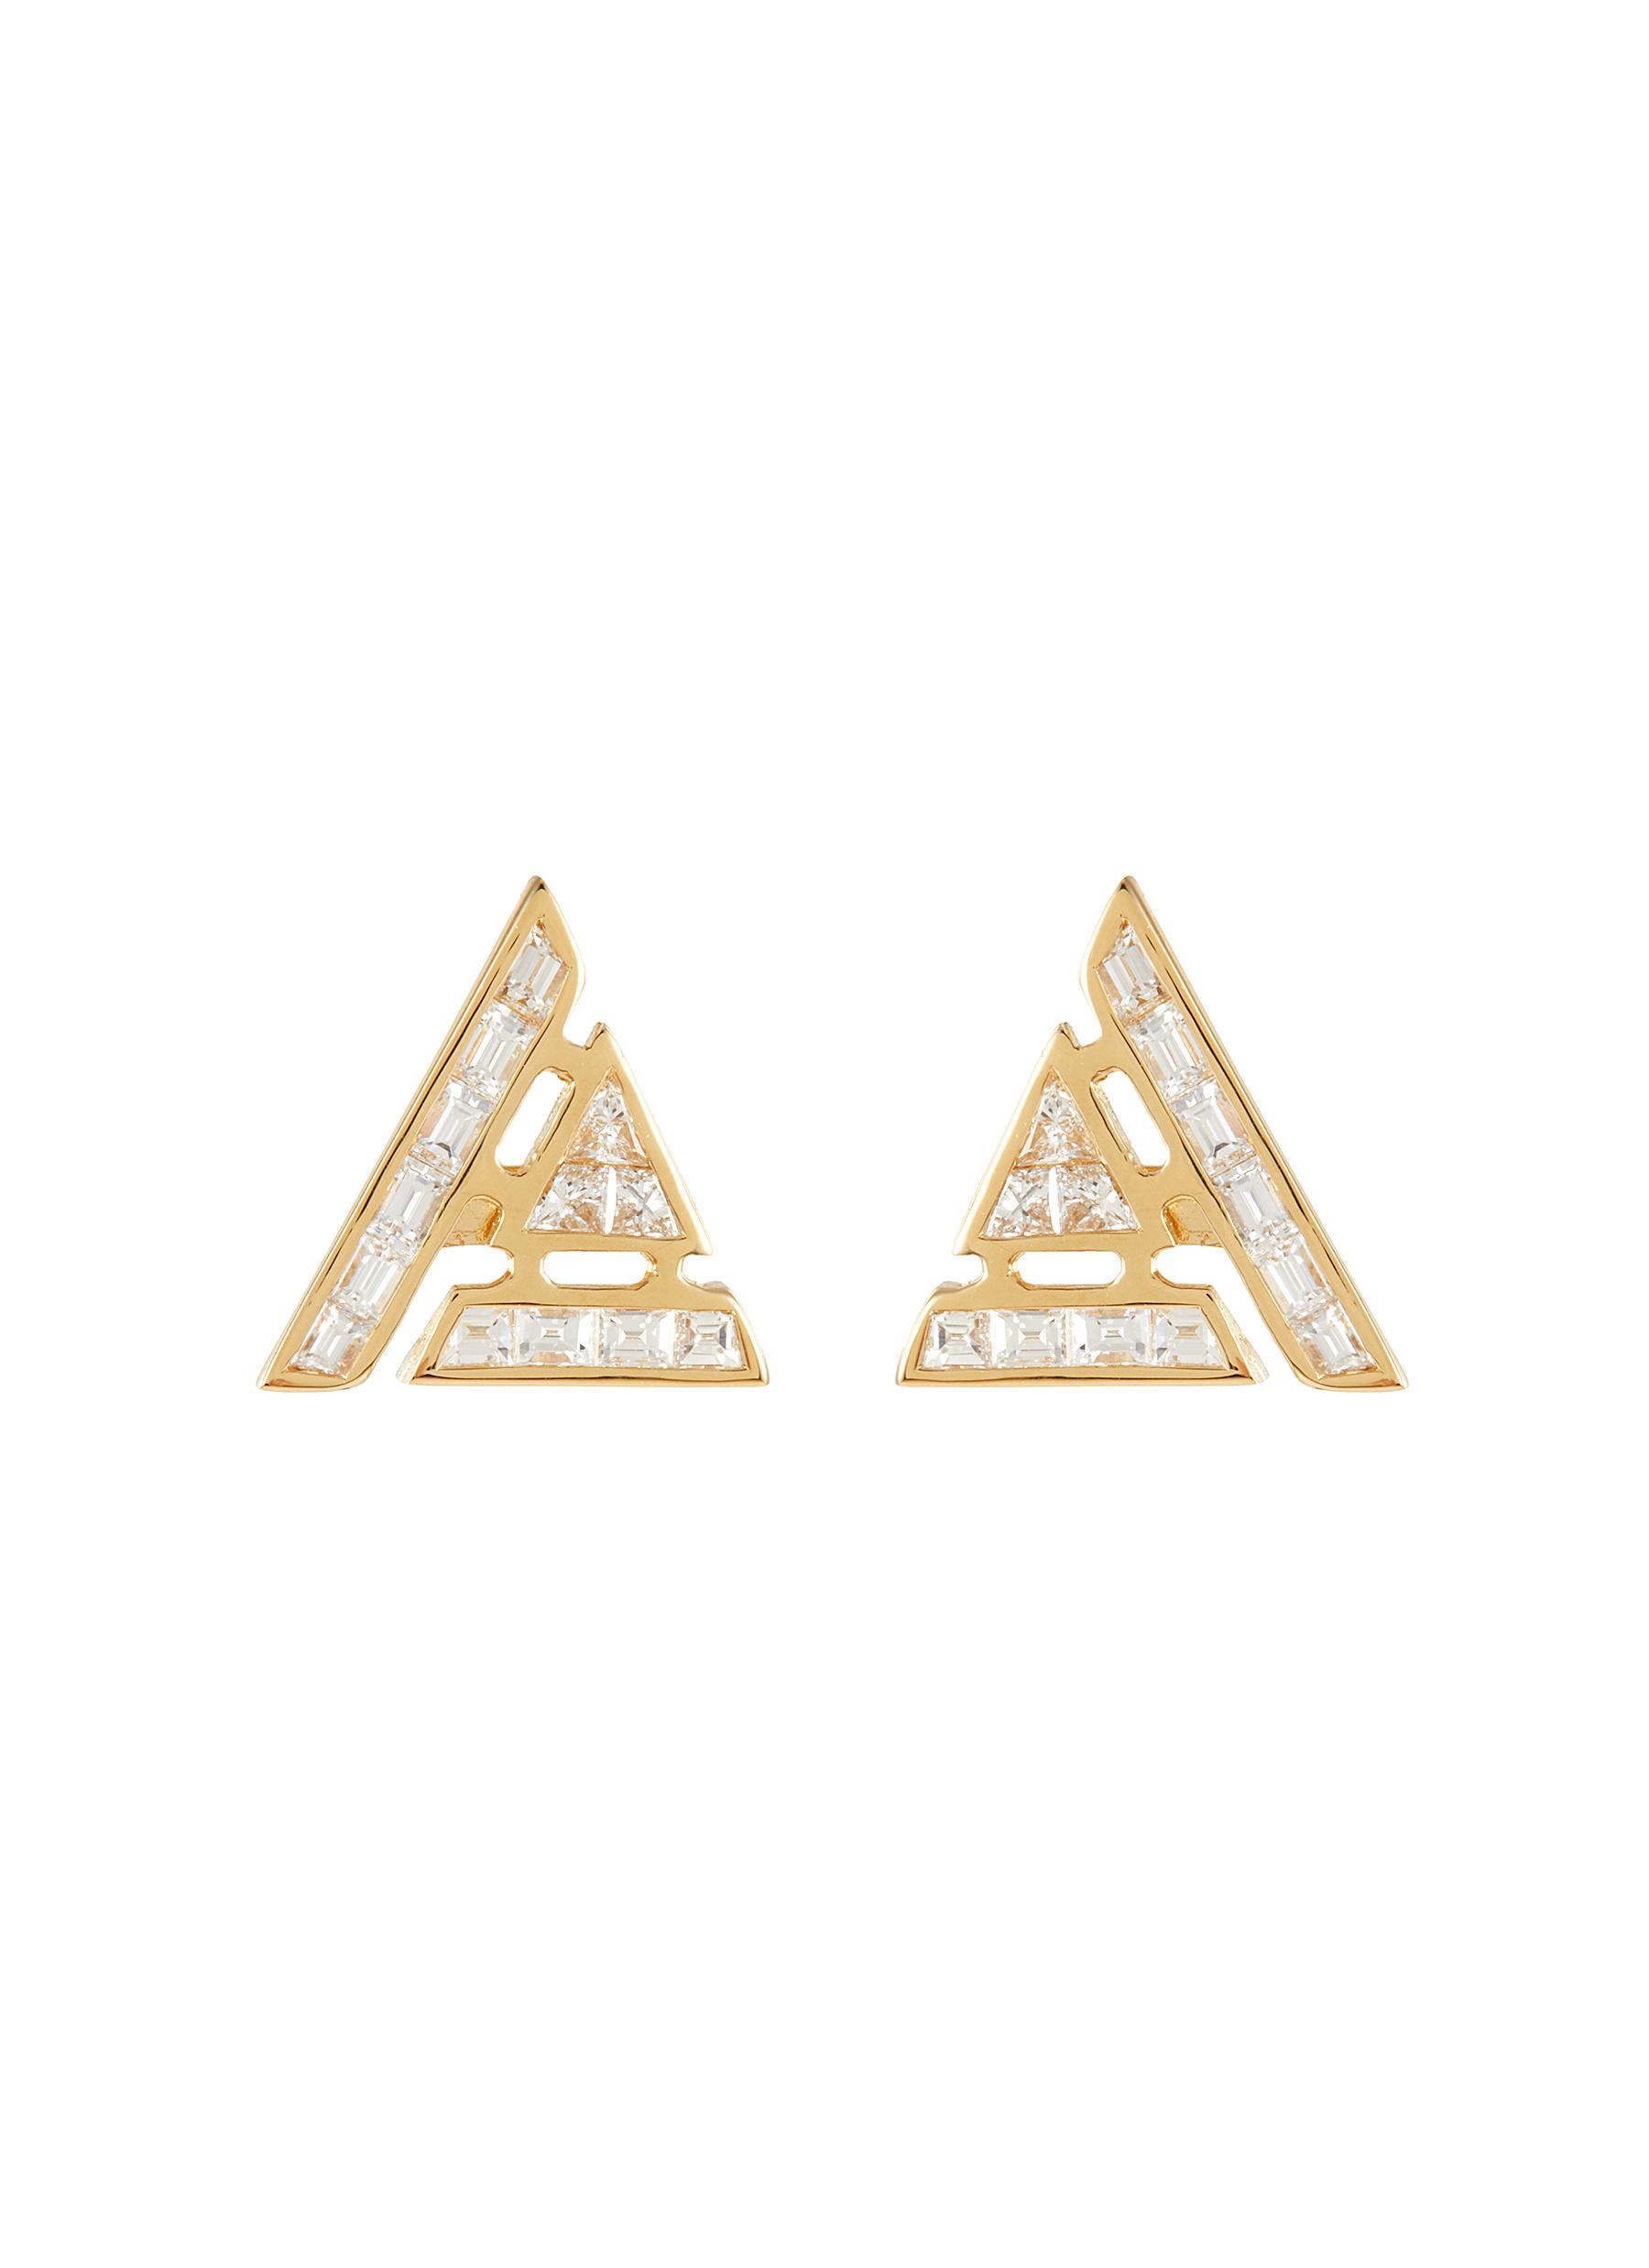 KAVANT & SHARART ‘GeoArt' Diamond 18K Gold Triangular Earrings